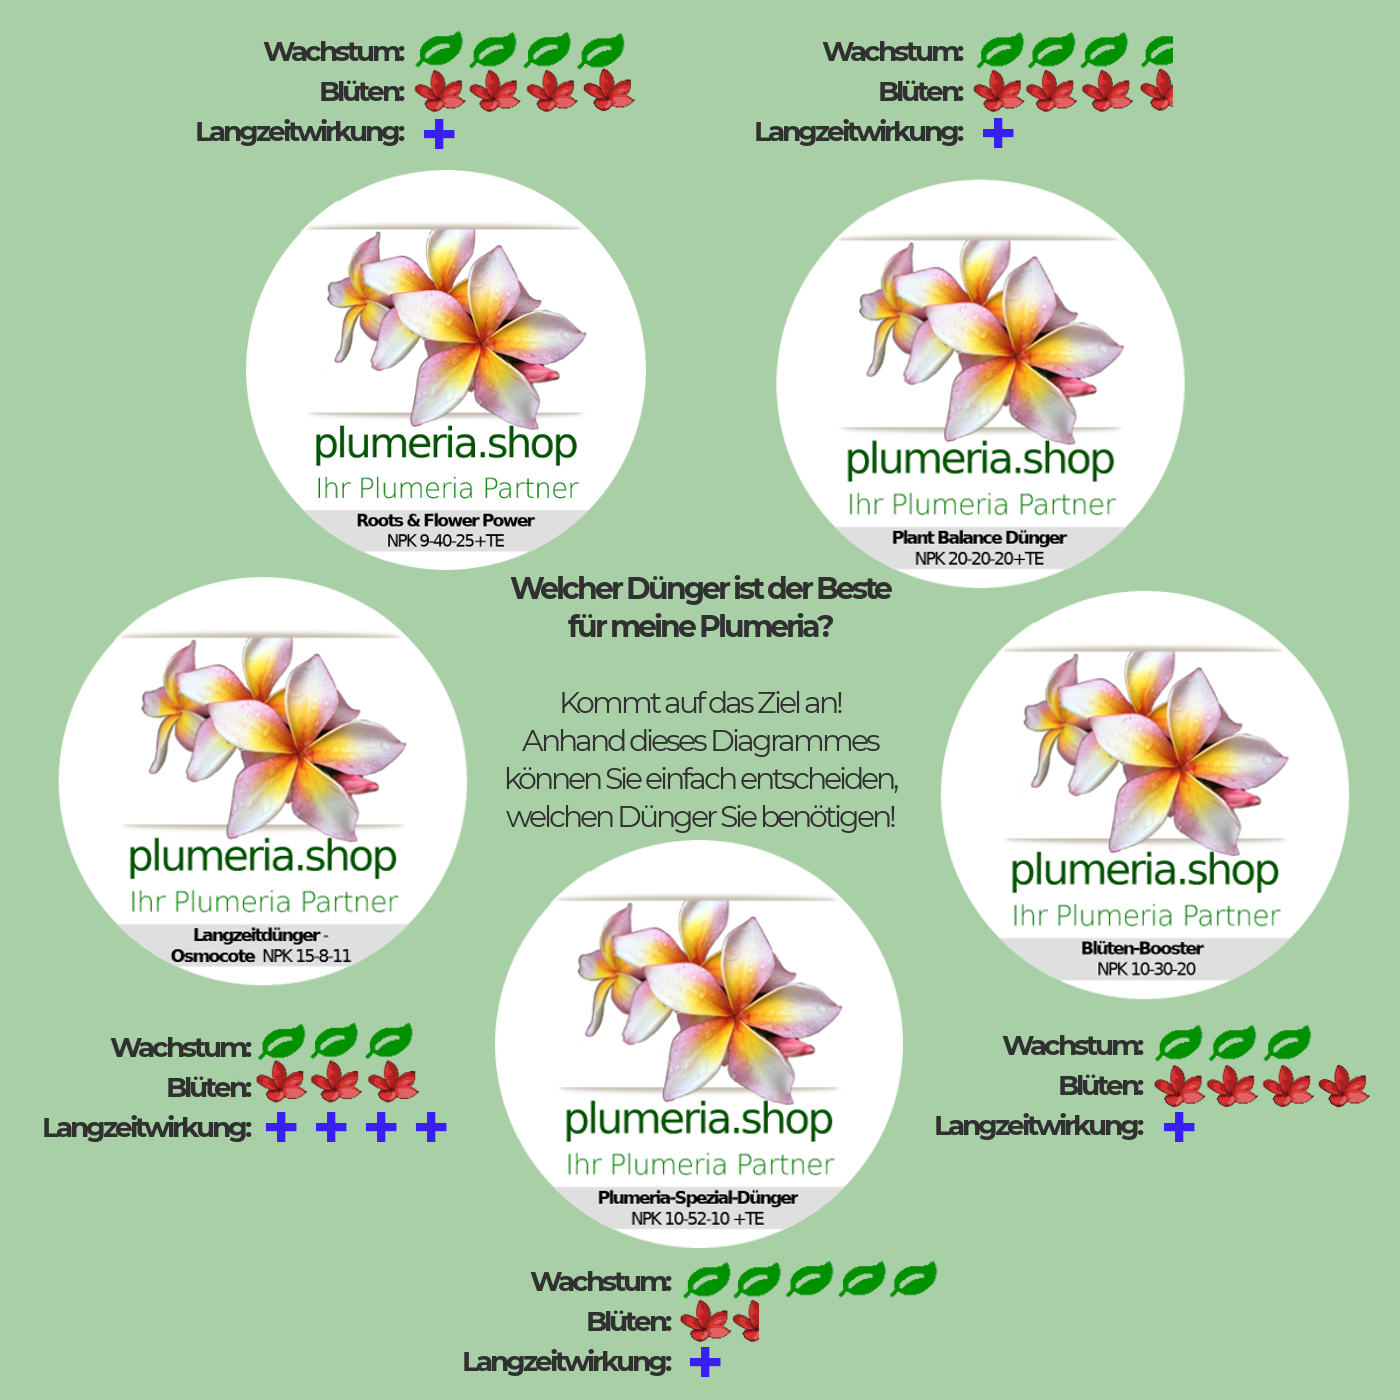 Plumeria / Frangipani Fertiliser Overview